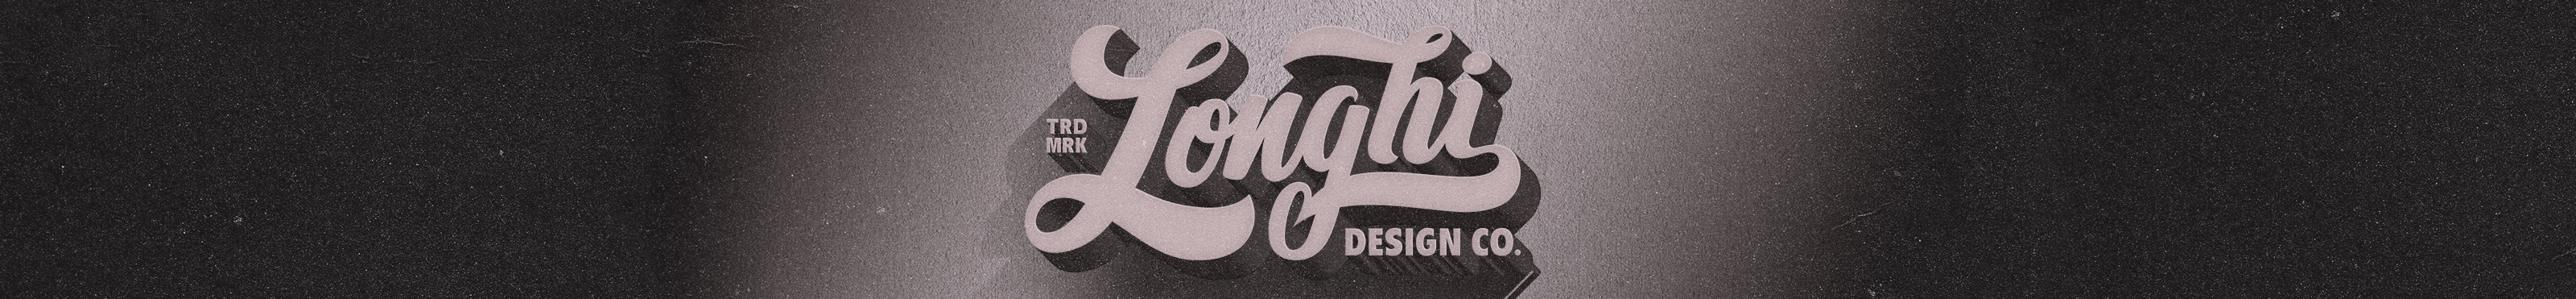 Richard Longhi's profile banner